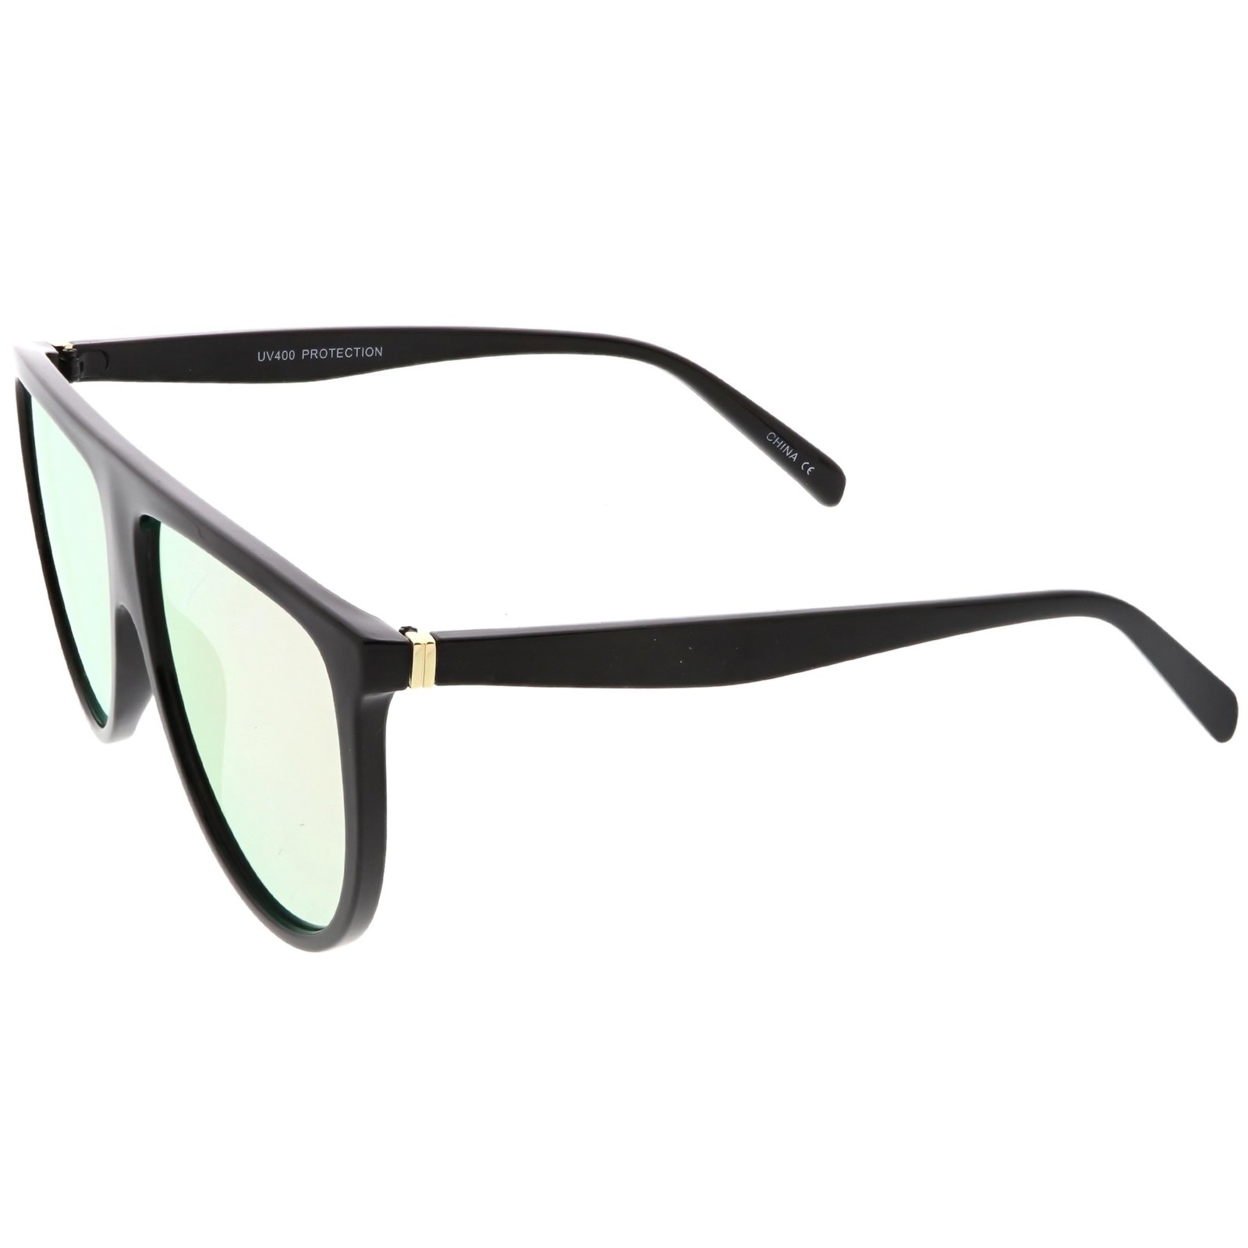 Oversize Modern Aviator Sunglasses Flat Top Color Mirrored Lens 59mm - Tortoise / Magenta Mirror